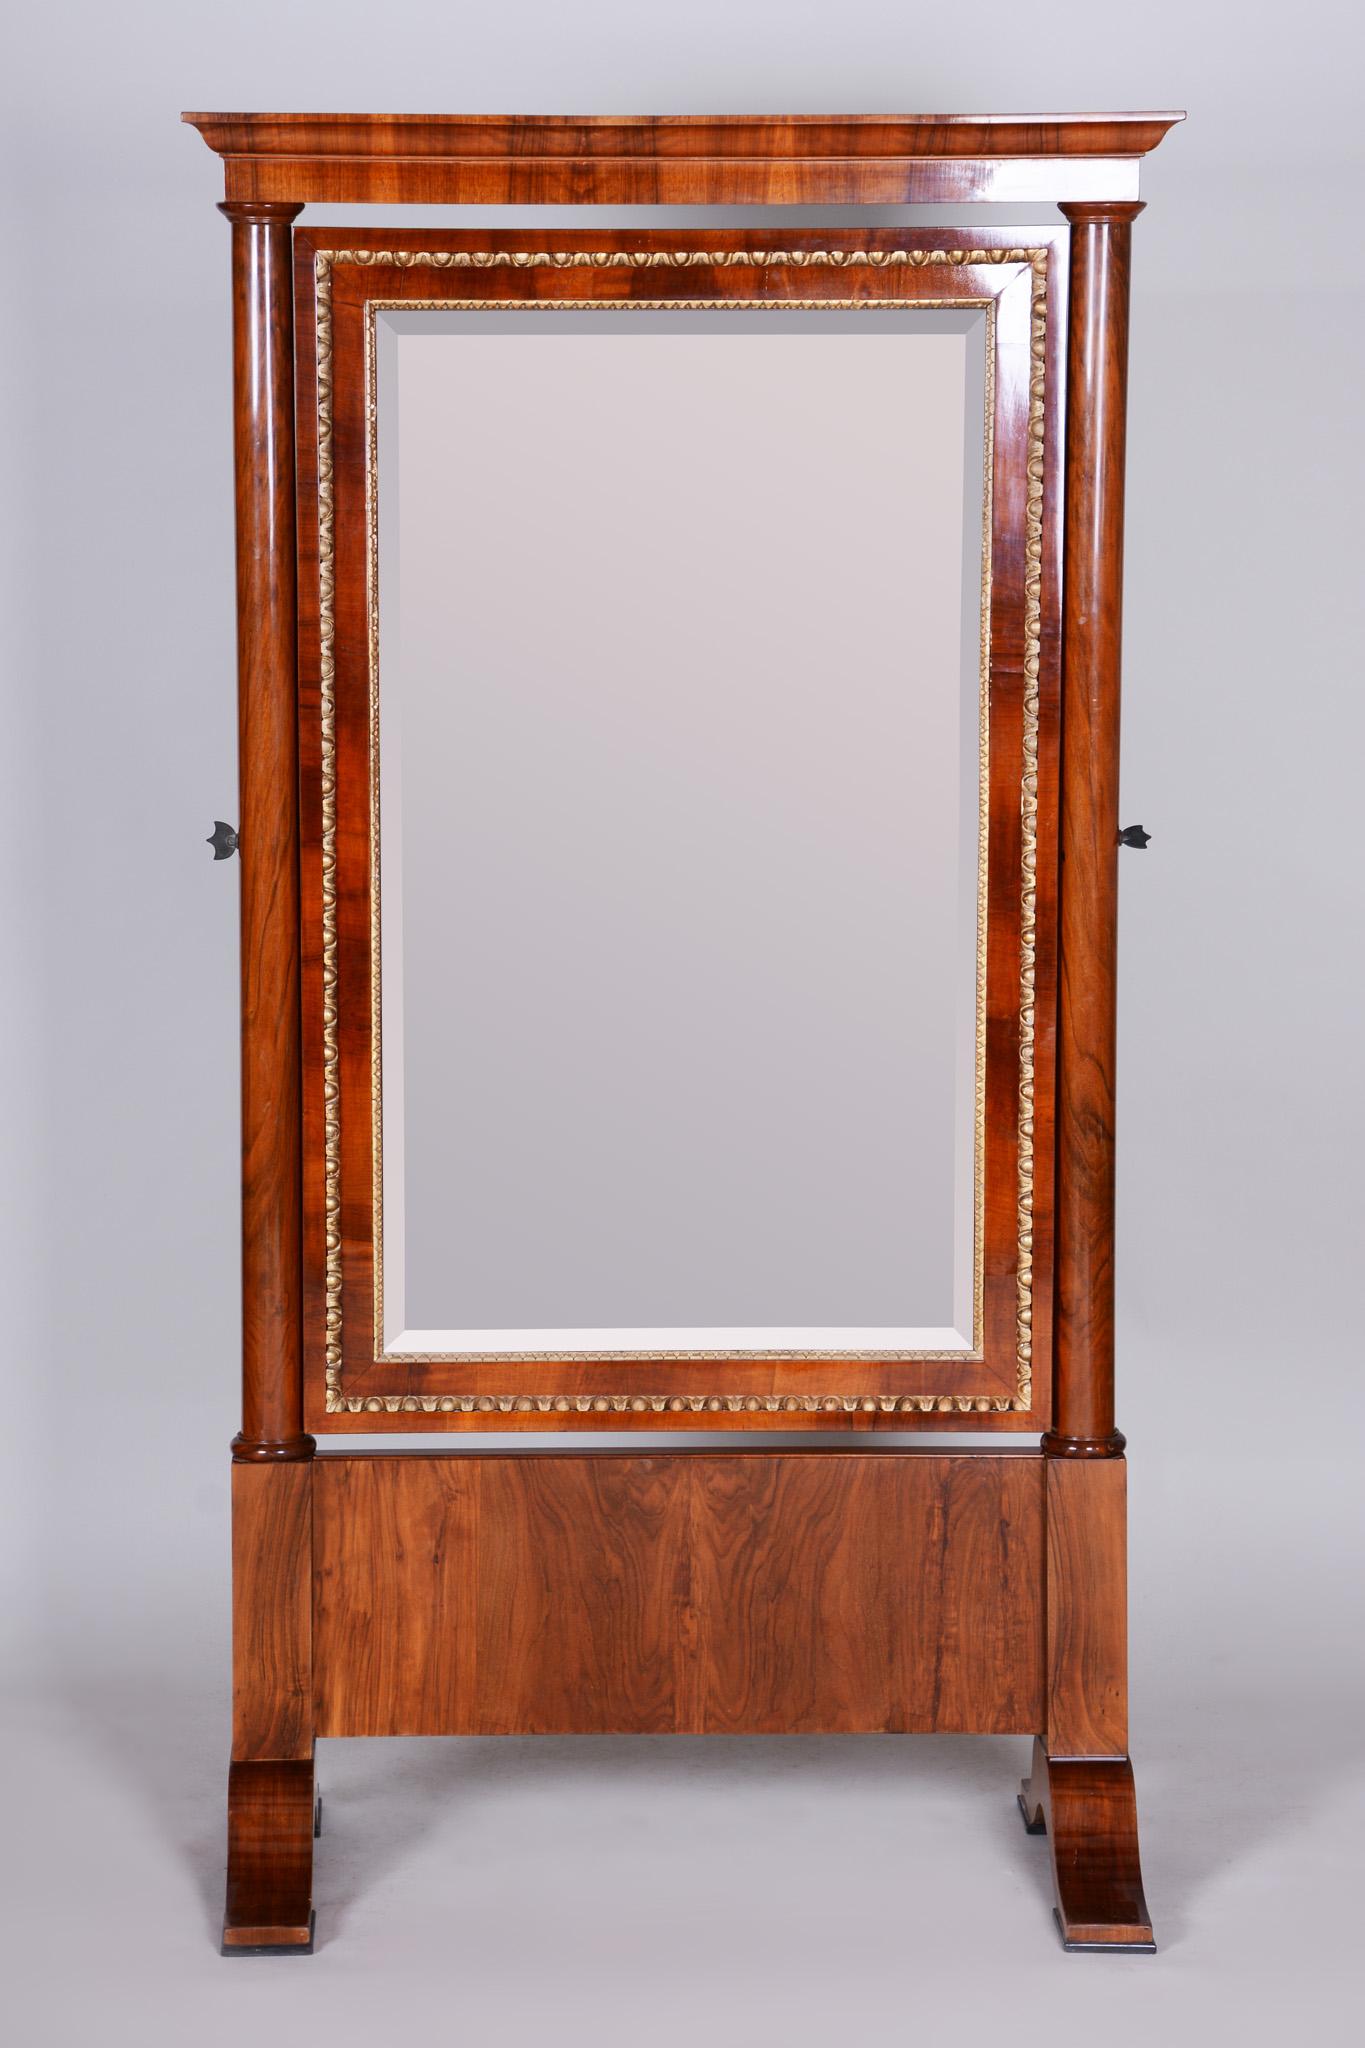 Biedermeier Mirror
Style:19th century
Period:1810-1819
Origin:Austria
Height:182 cm / 71.65